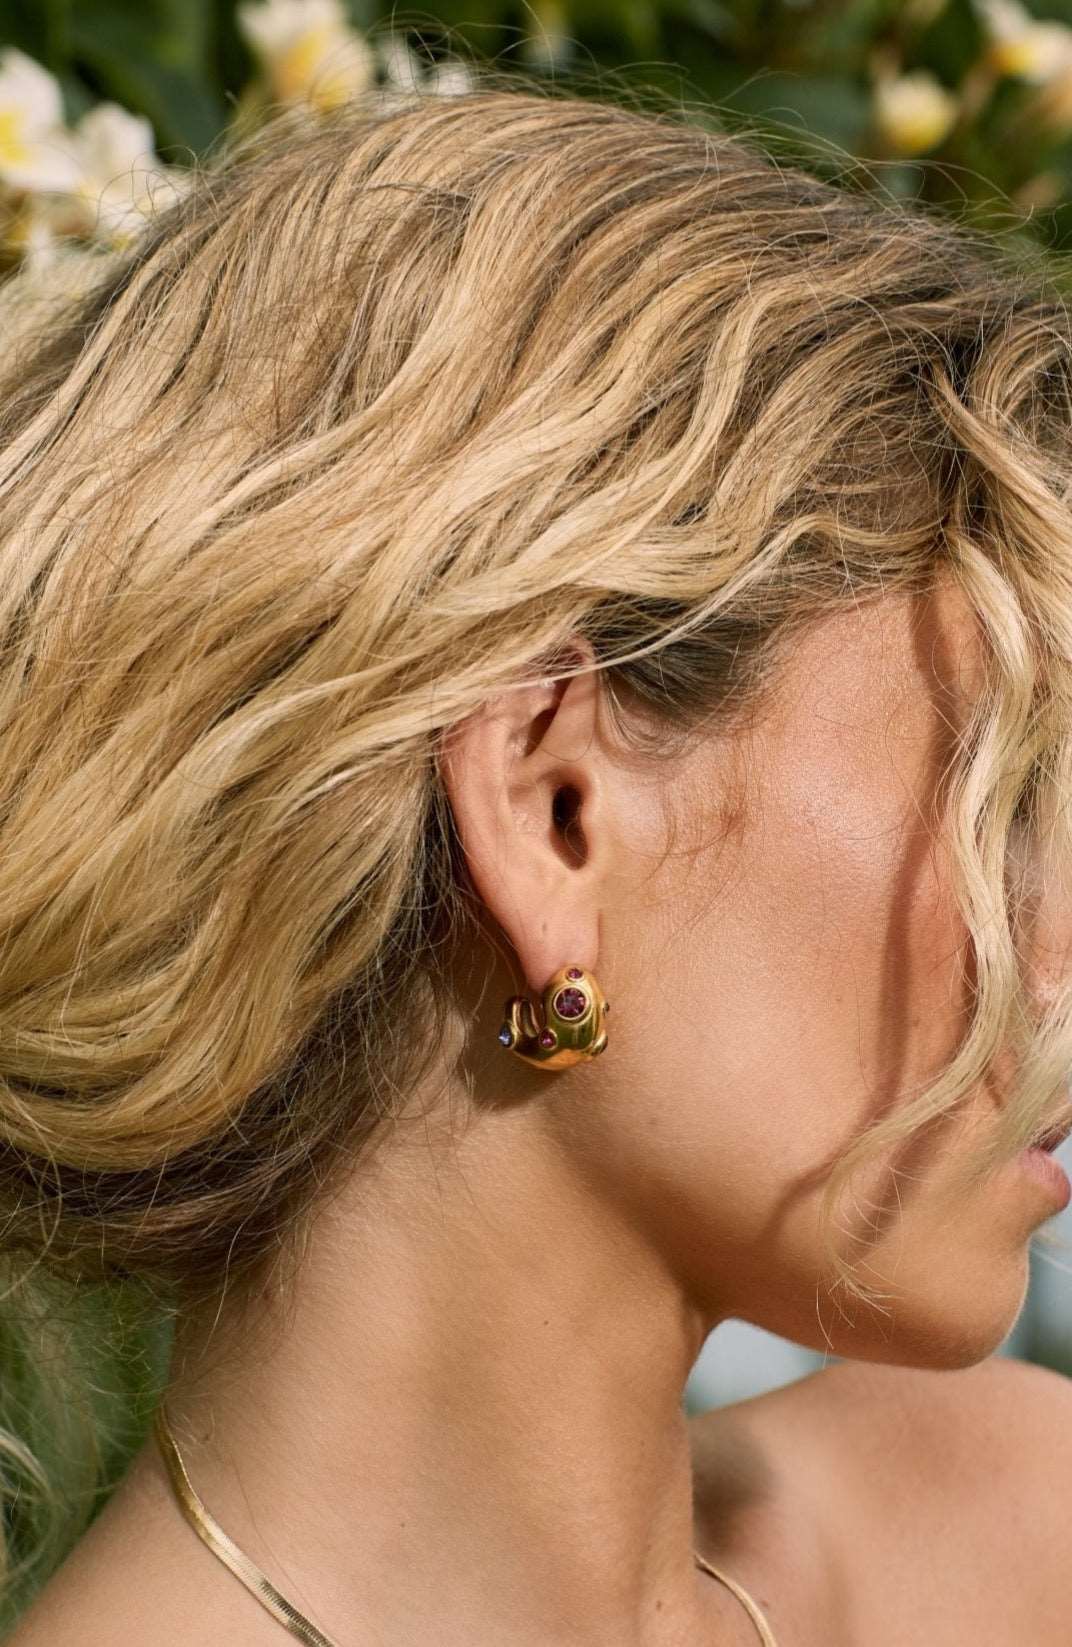 Pink and purple coloured gemstone earrings on blonde girl